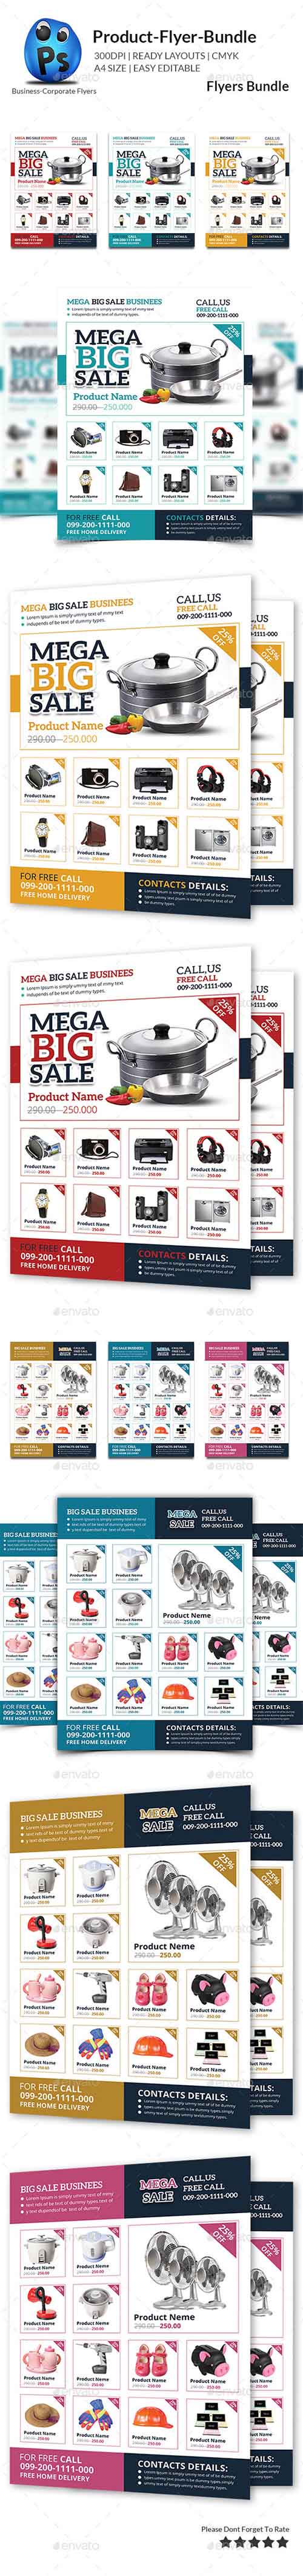 GraphicRiver - Product Promotion Flyer Bundle - 10986045